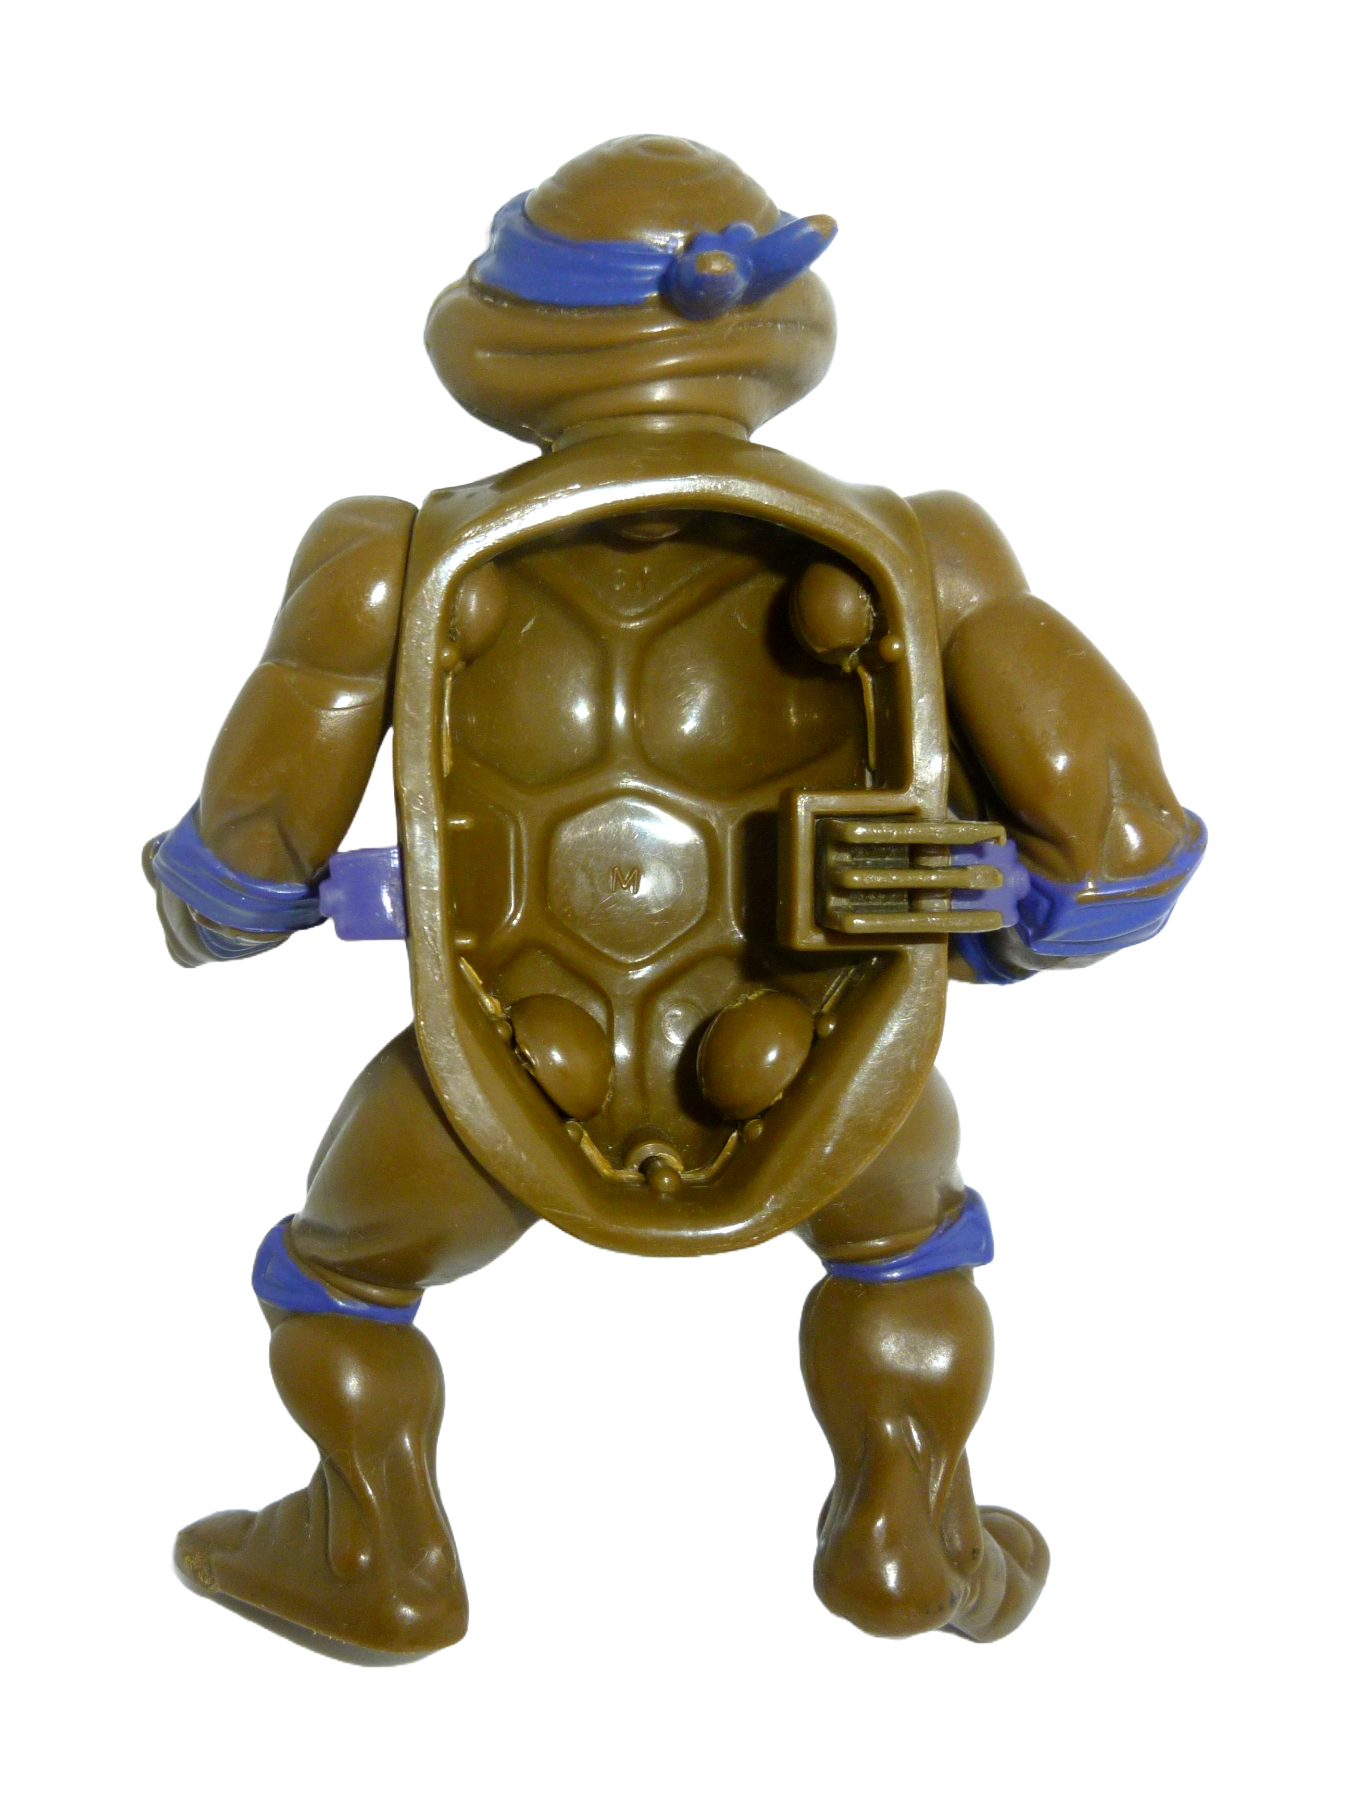 Donatello With Storage Shell - defective 1990 Mirage Studios / Playmates Toys 2